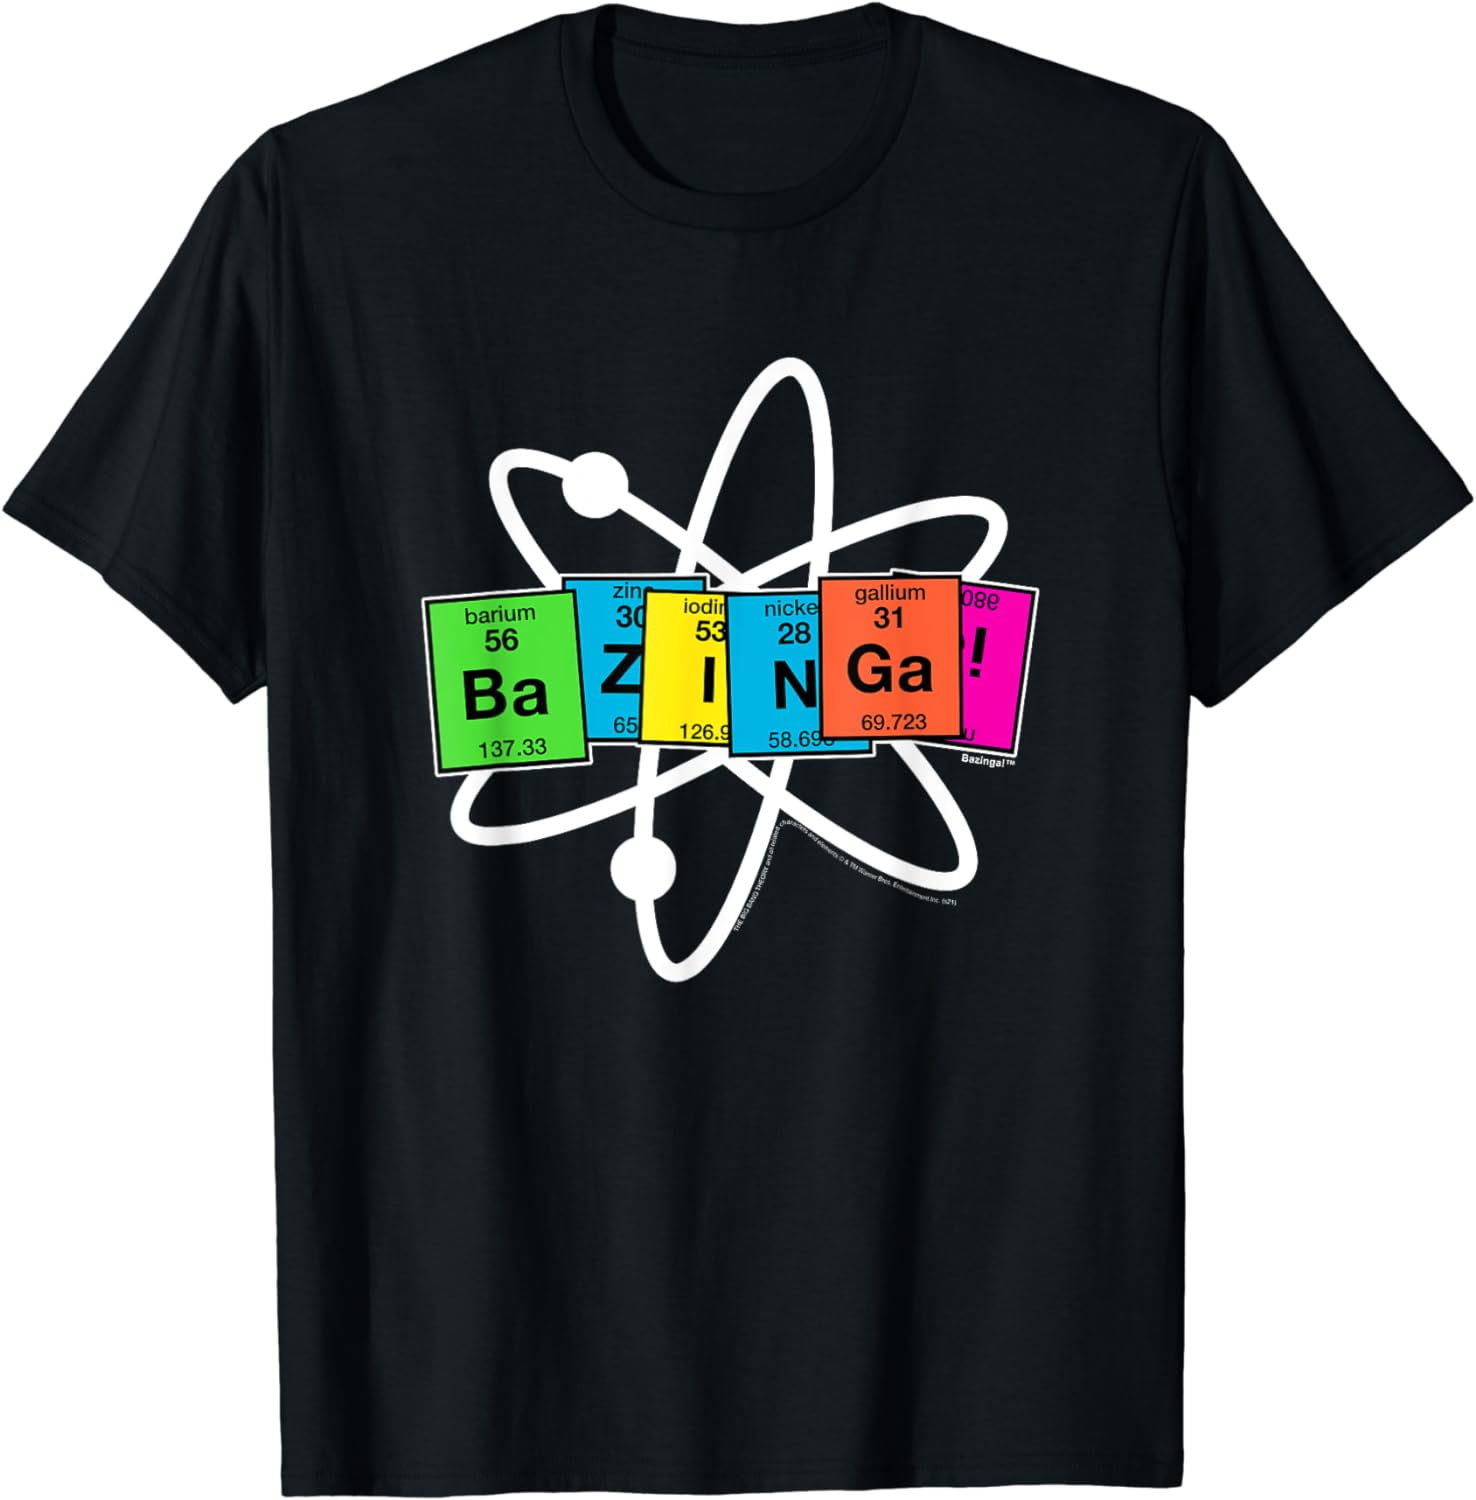 The Big Bang Theory Bazinga Elements with Atom T-Shirt - Walmart.com